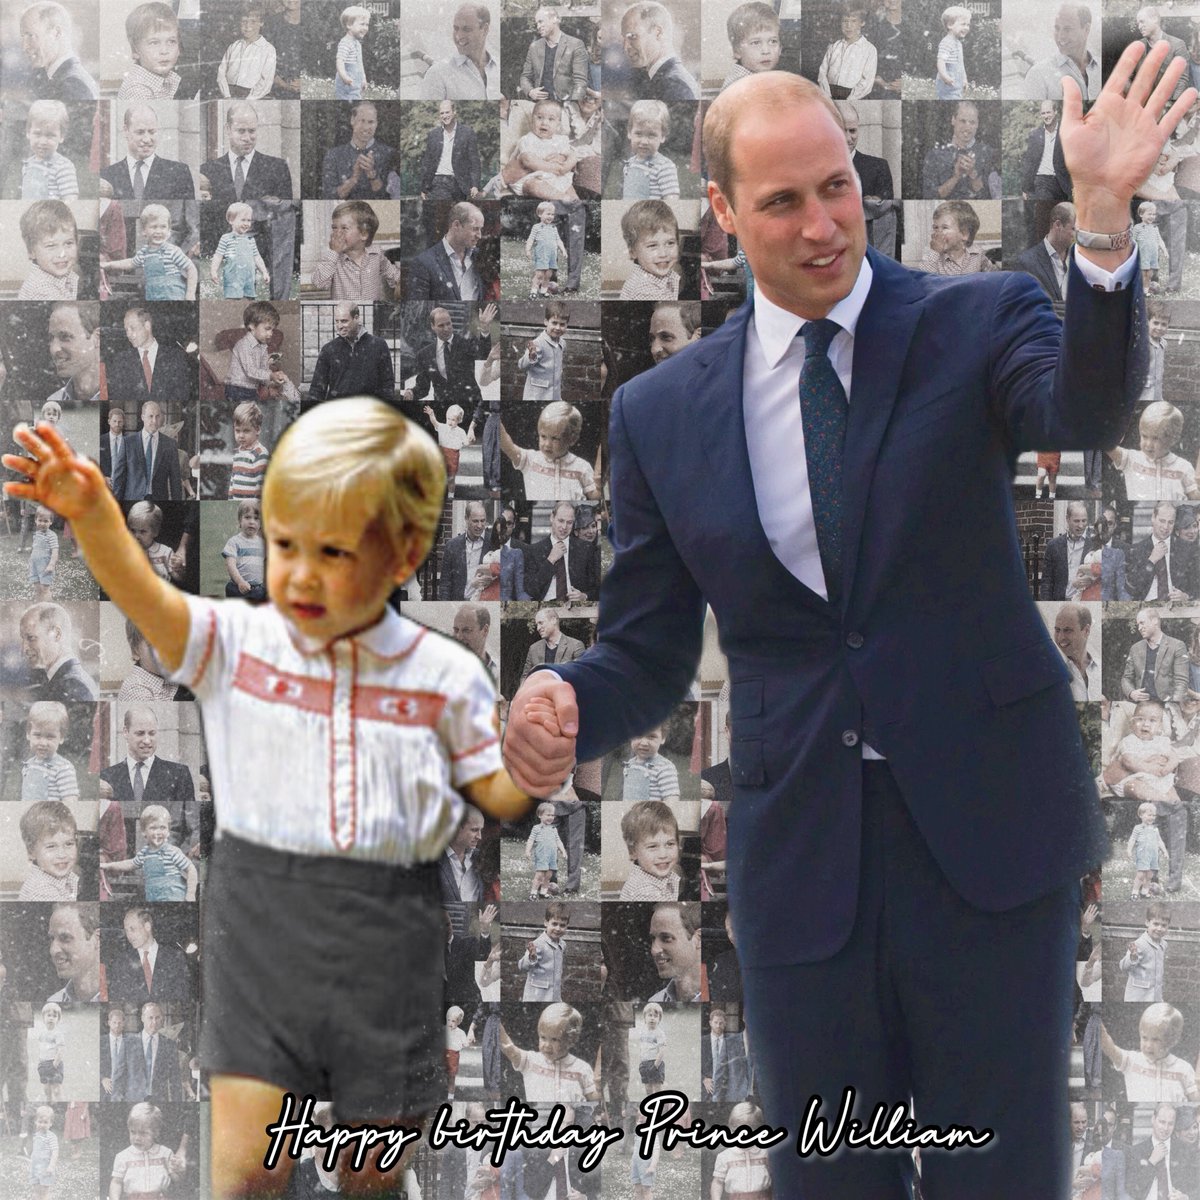 Happy birthday to HRH Prince William of Wales 🥳💙 @KensingtonRoyal ✨
#HappyBirthdayPrinceWilliam